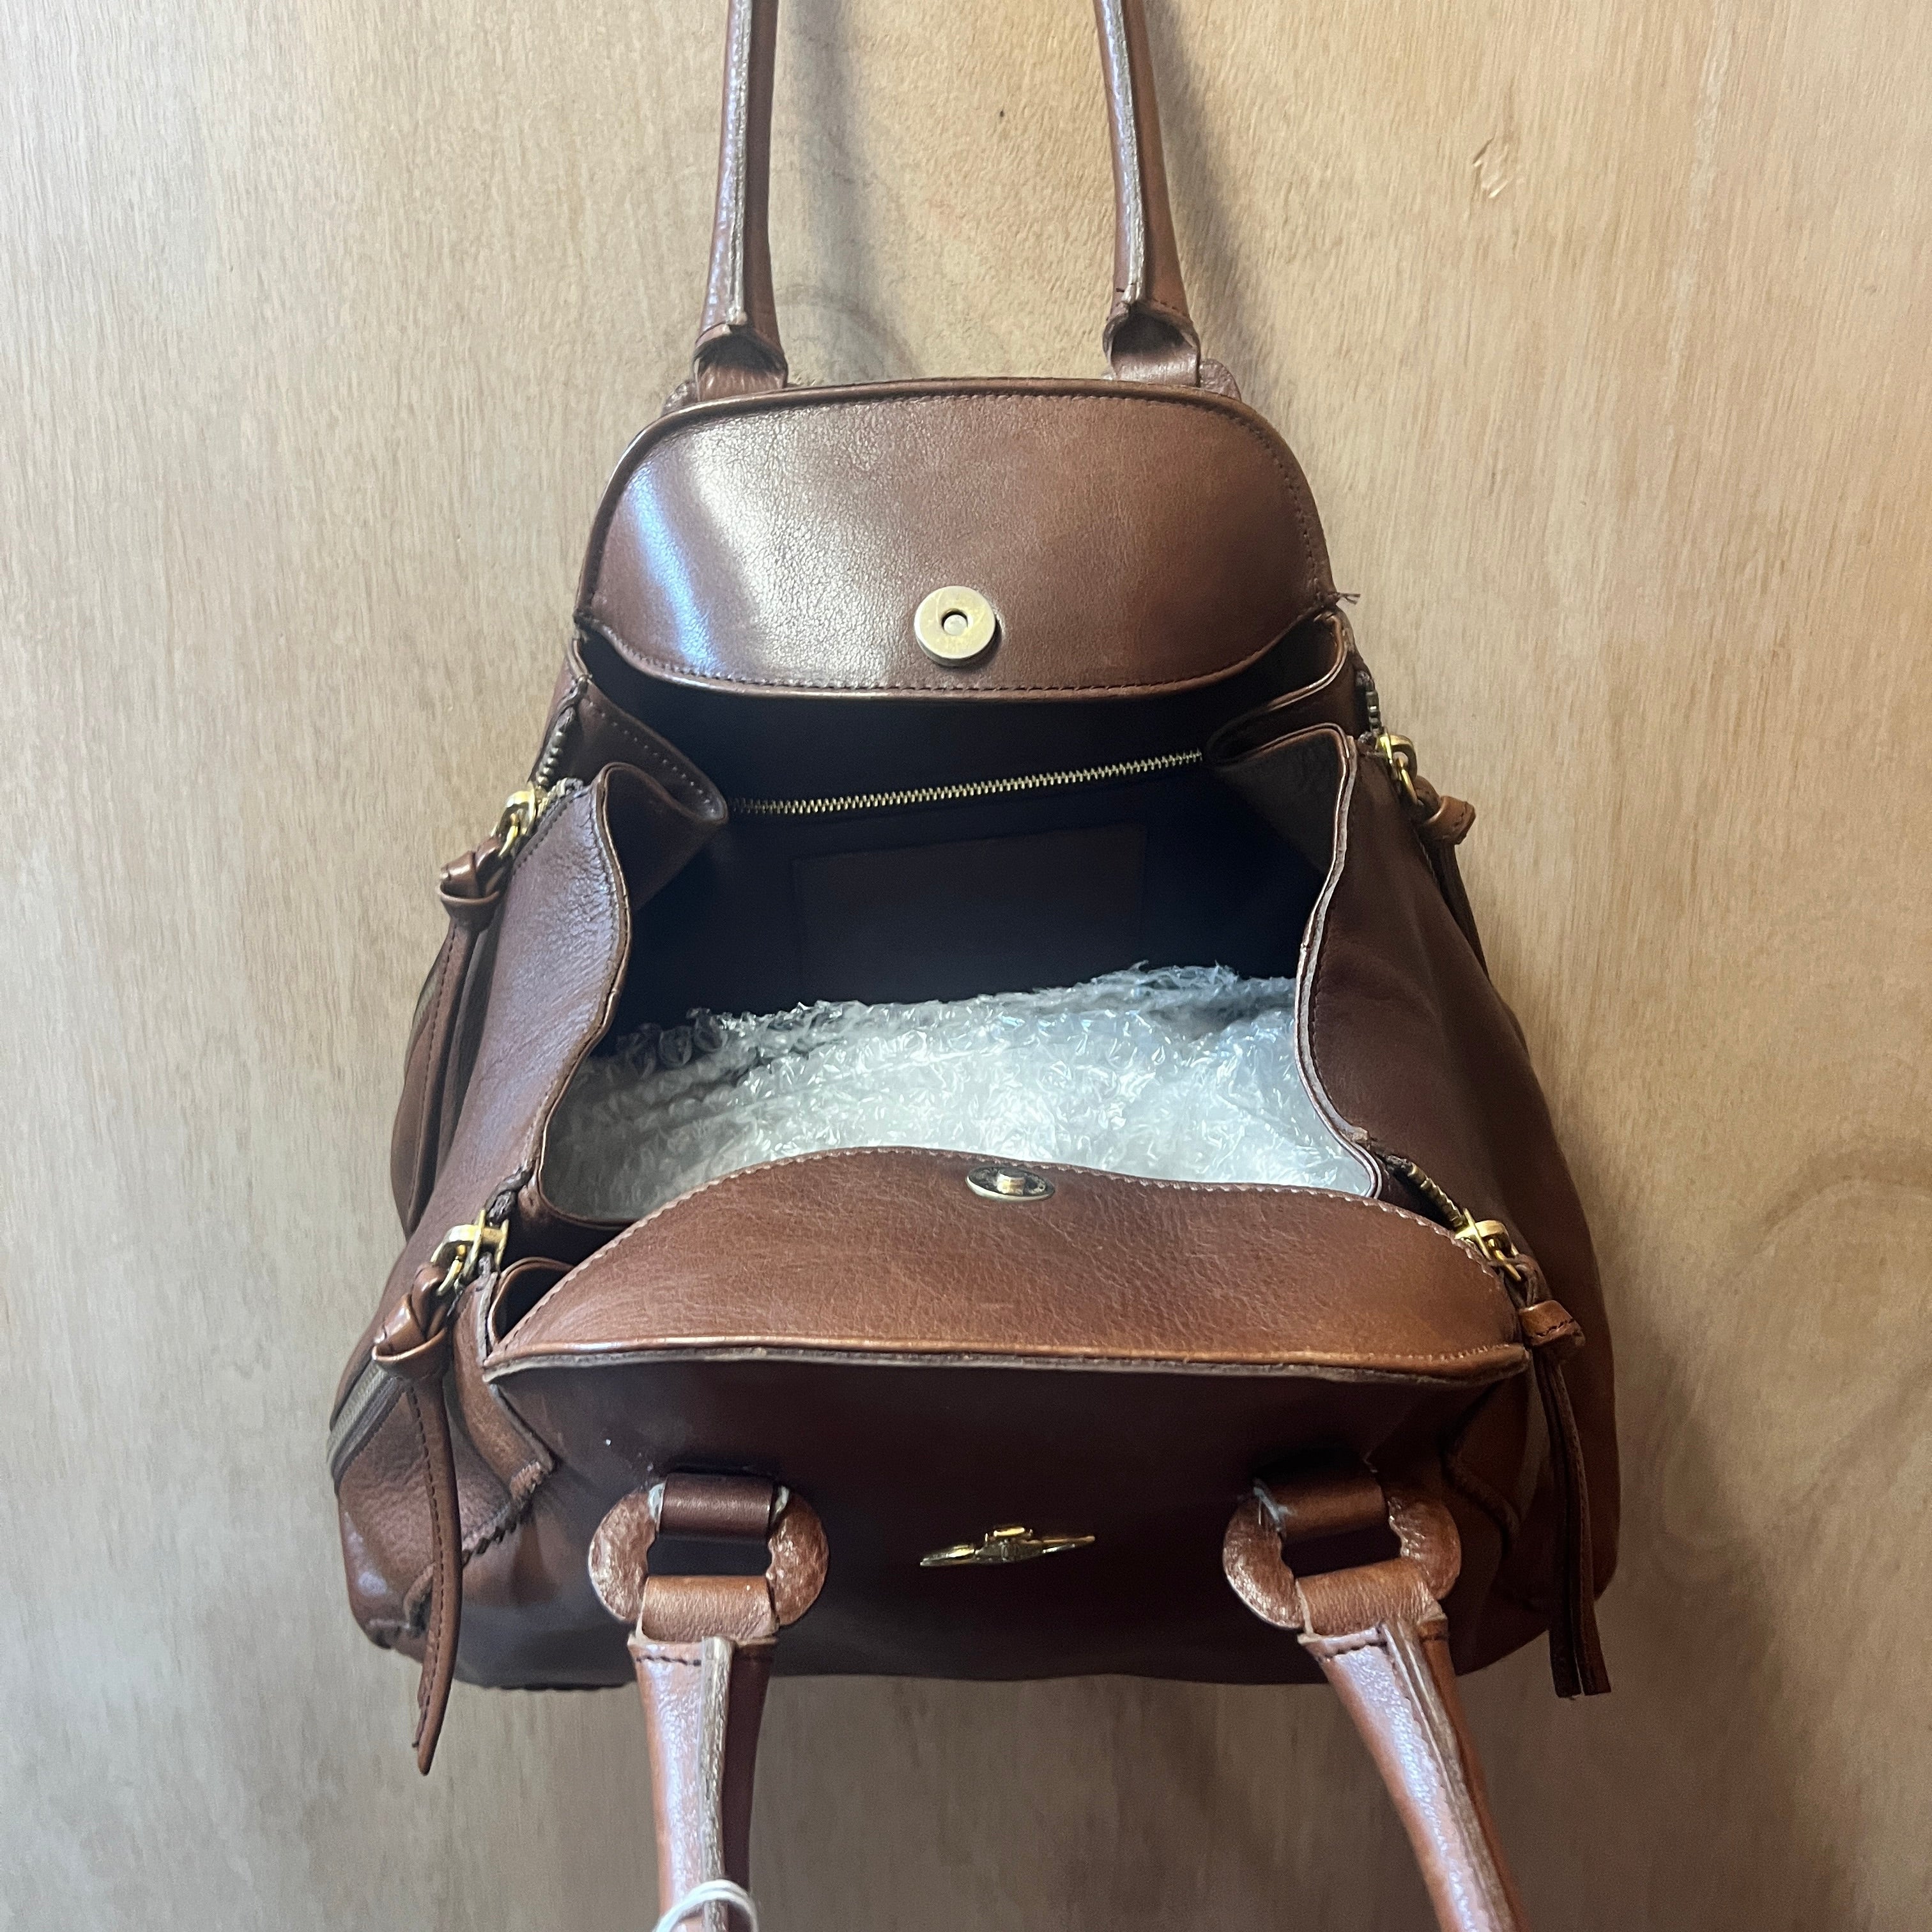 VIVIENNE WESTWOOD leather Yasmin handbag